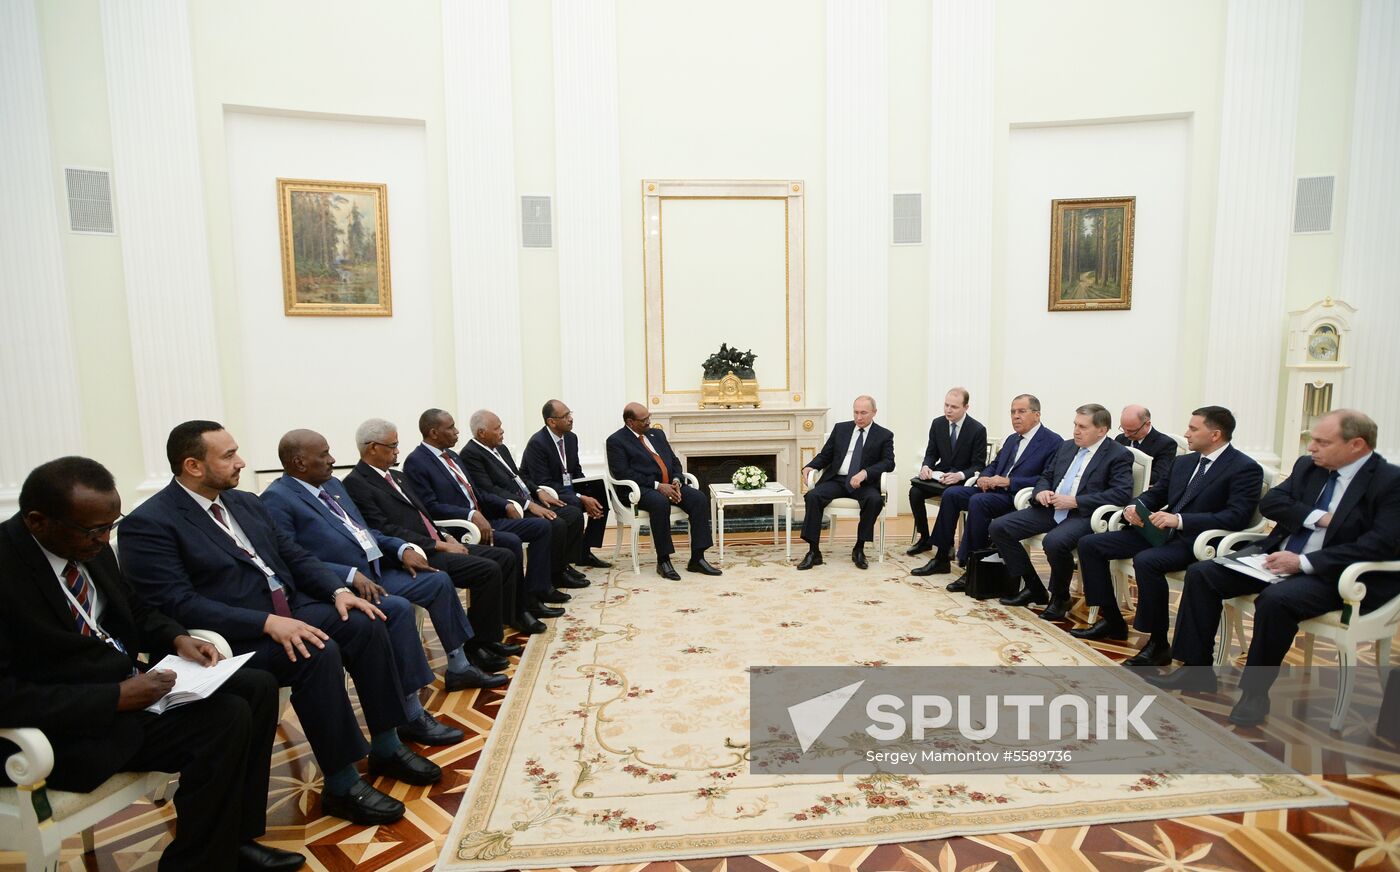 Putin meets with al-Bashir